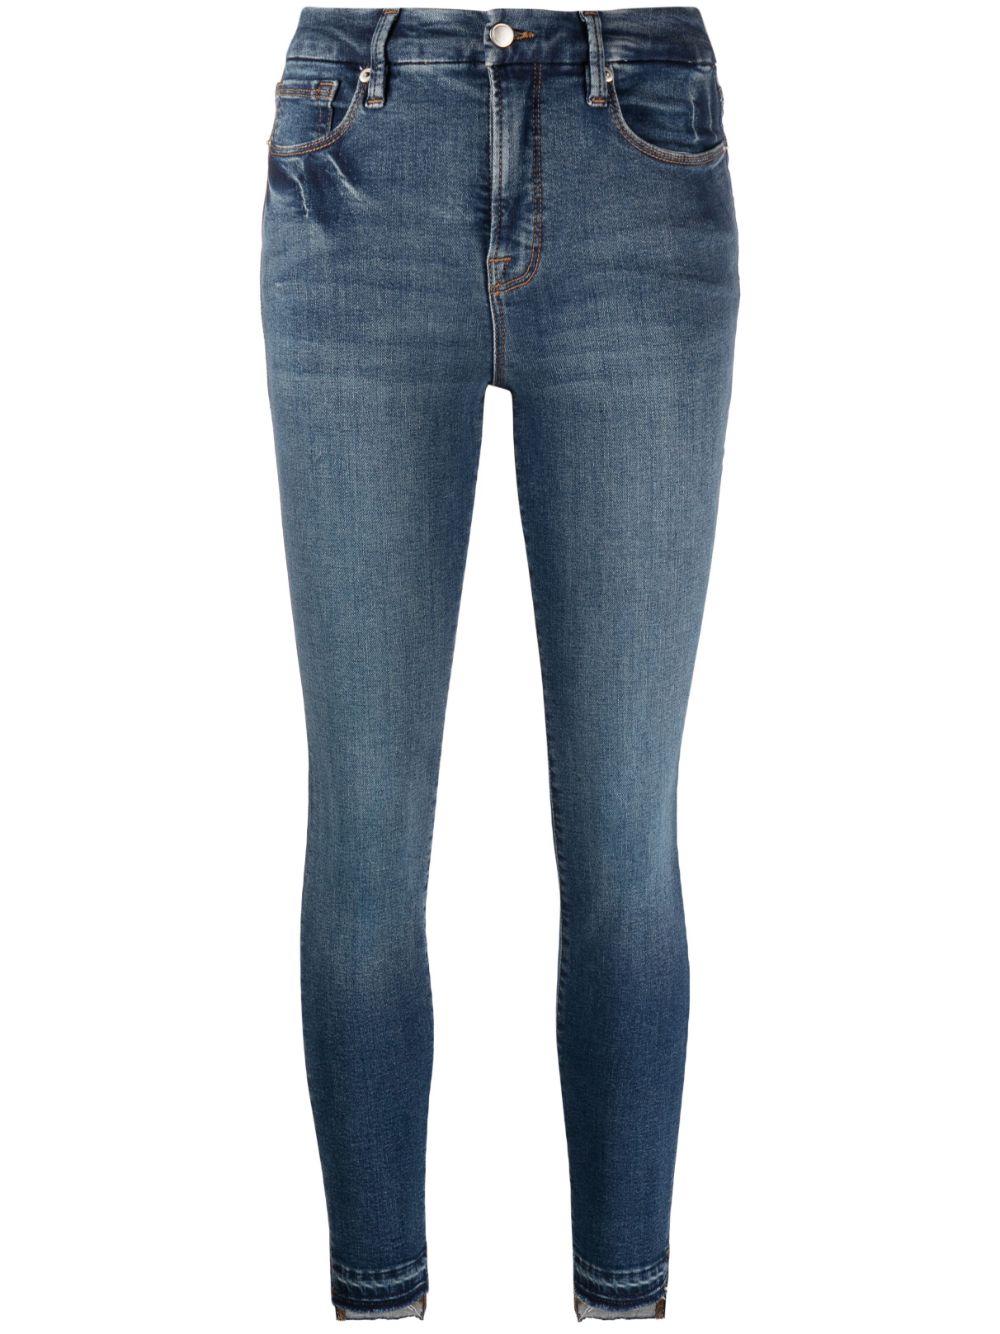 Good Legs high-rise skinny jeans